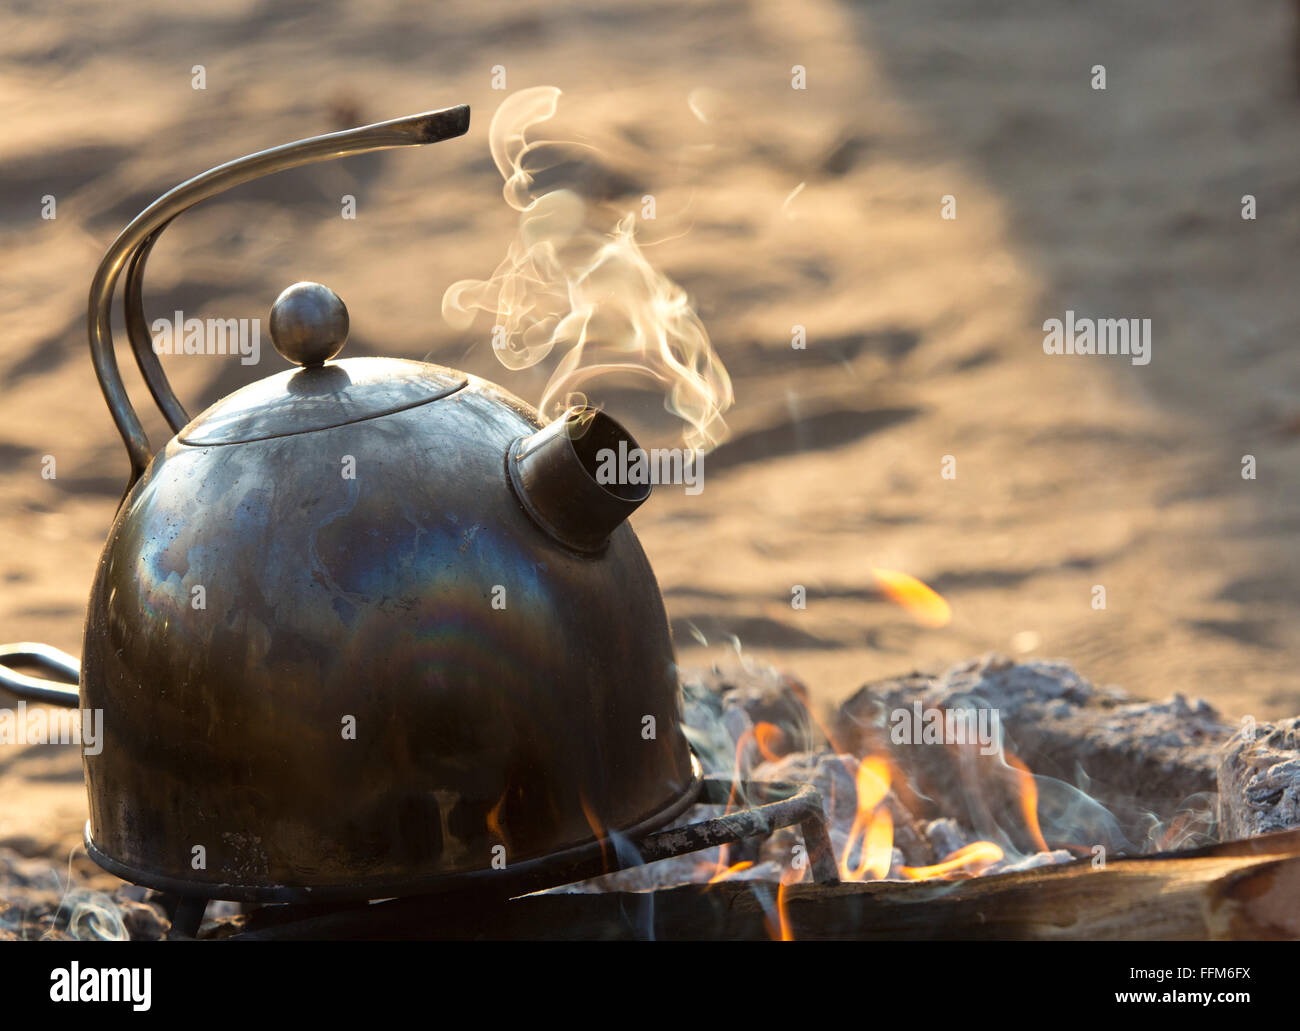 https://c8.alamy.com/comp/FFM6FX/kettle-boiling-on-a-campfire-FFM6FX.jpg